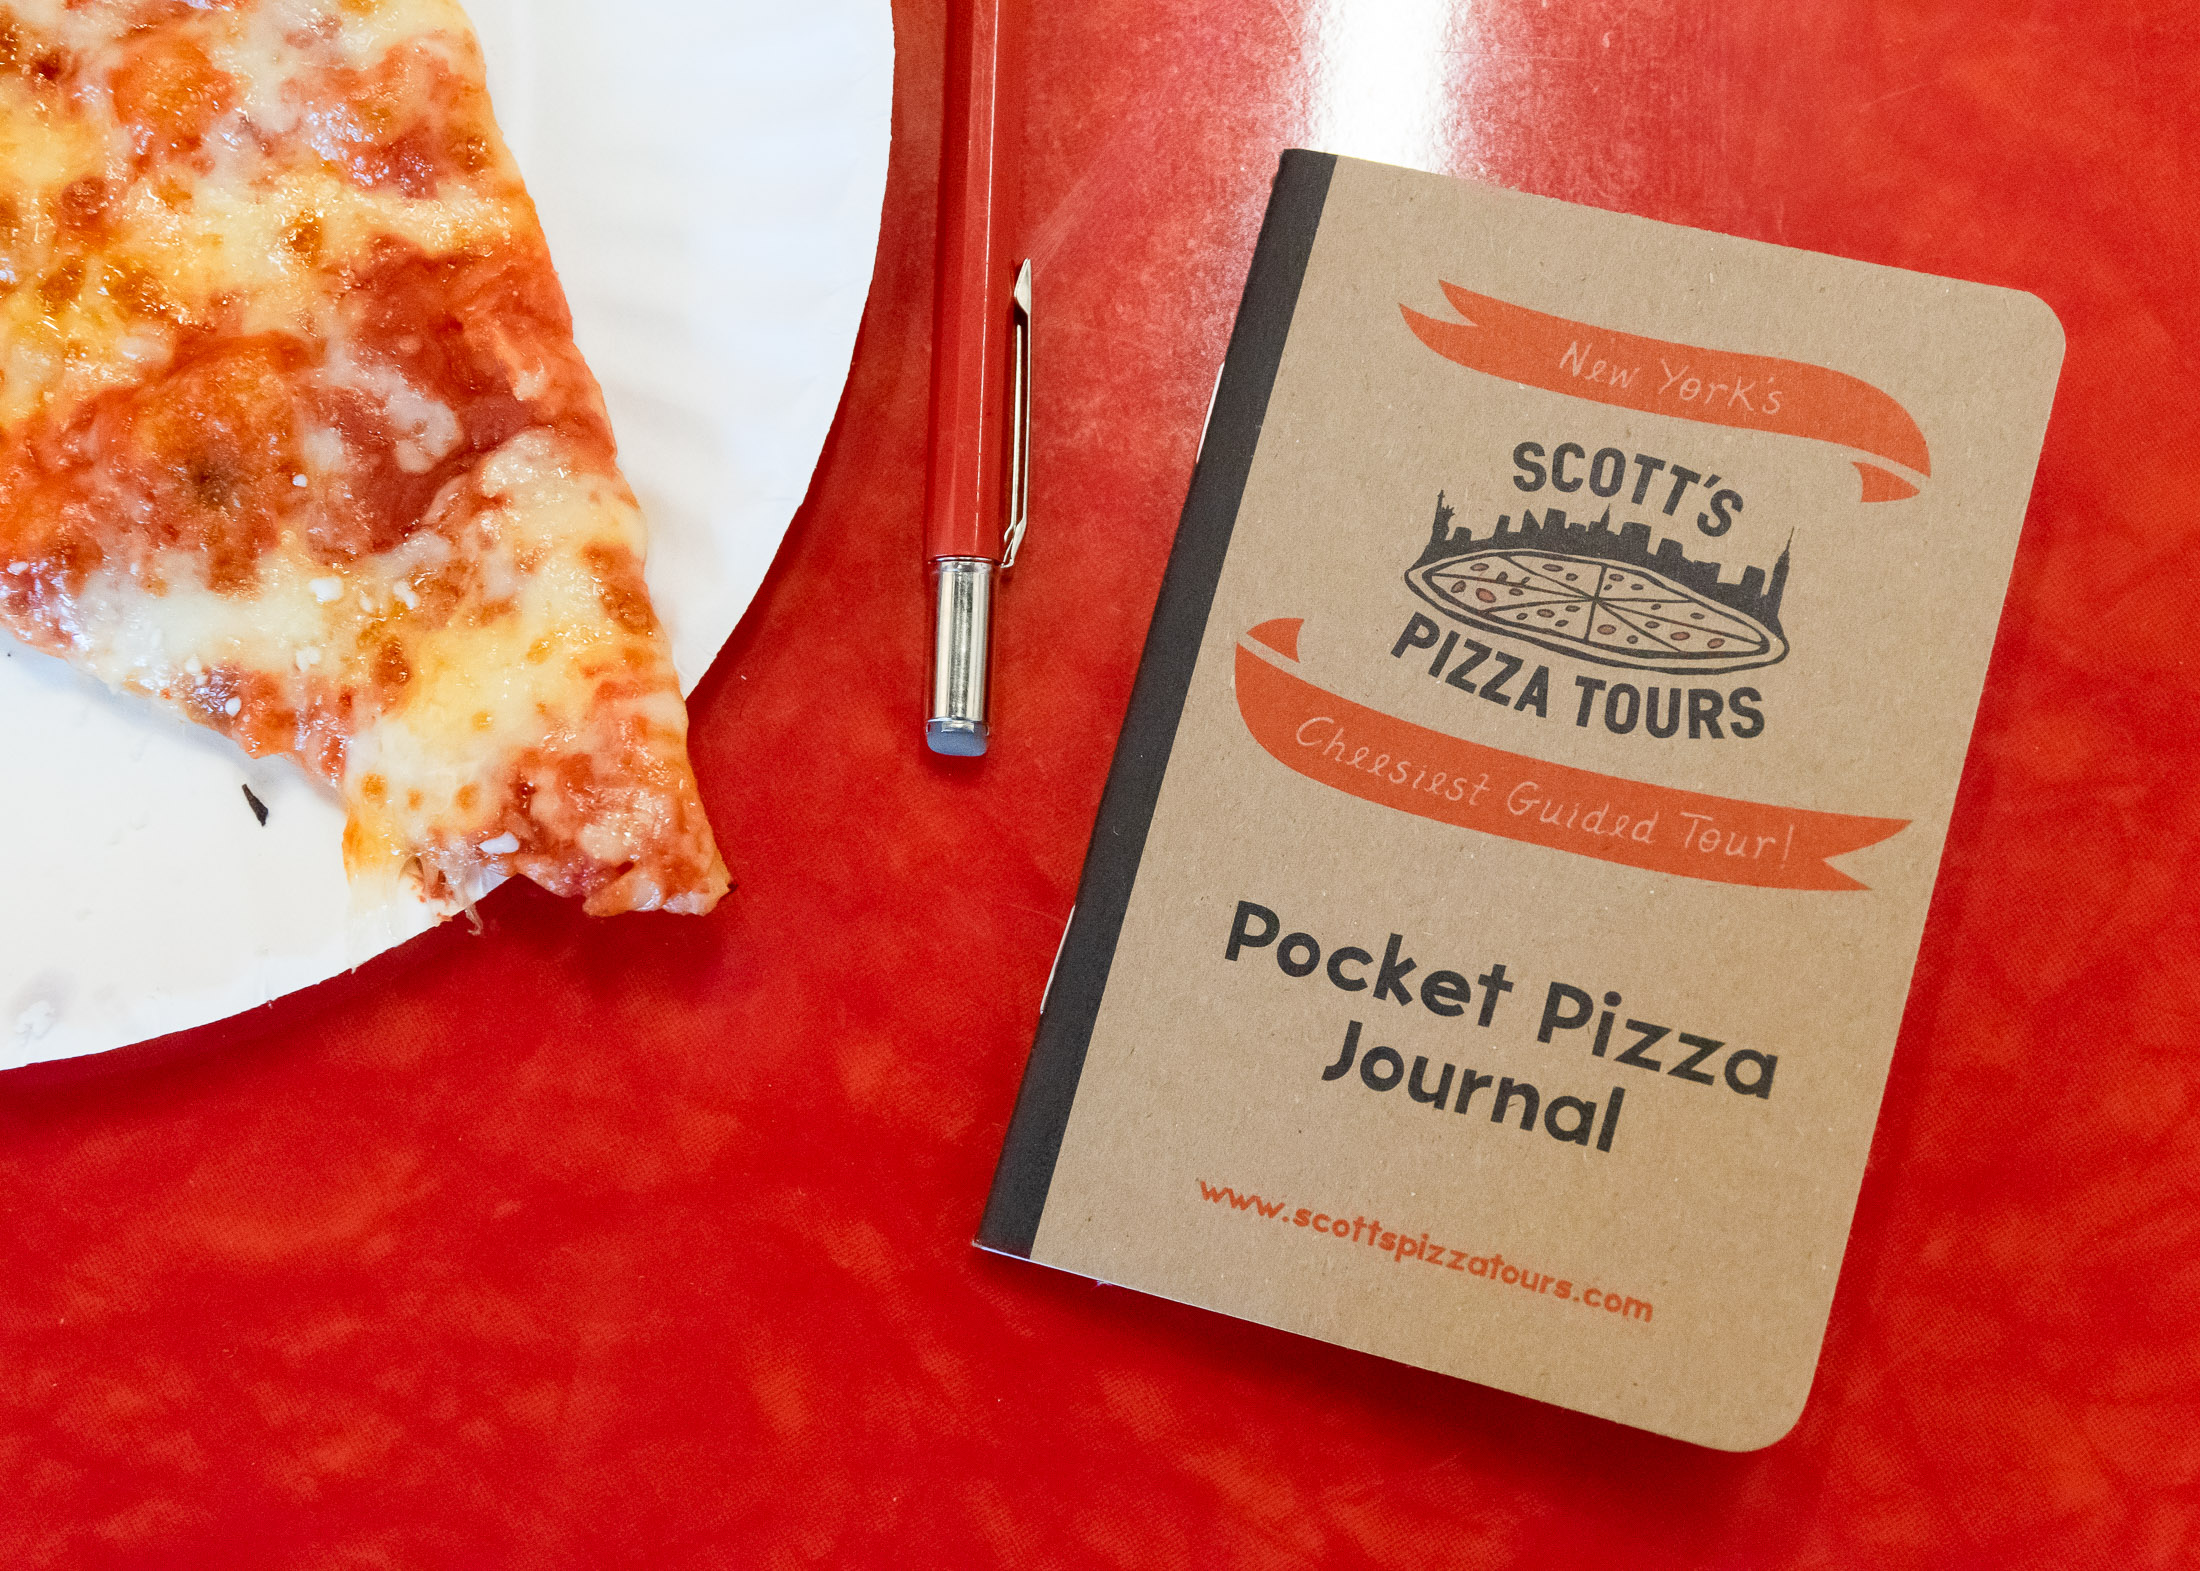 Scott's Pizza Tours Pocket Pizza Journal - Scout Books